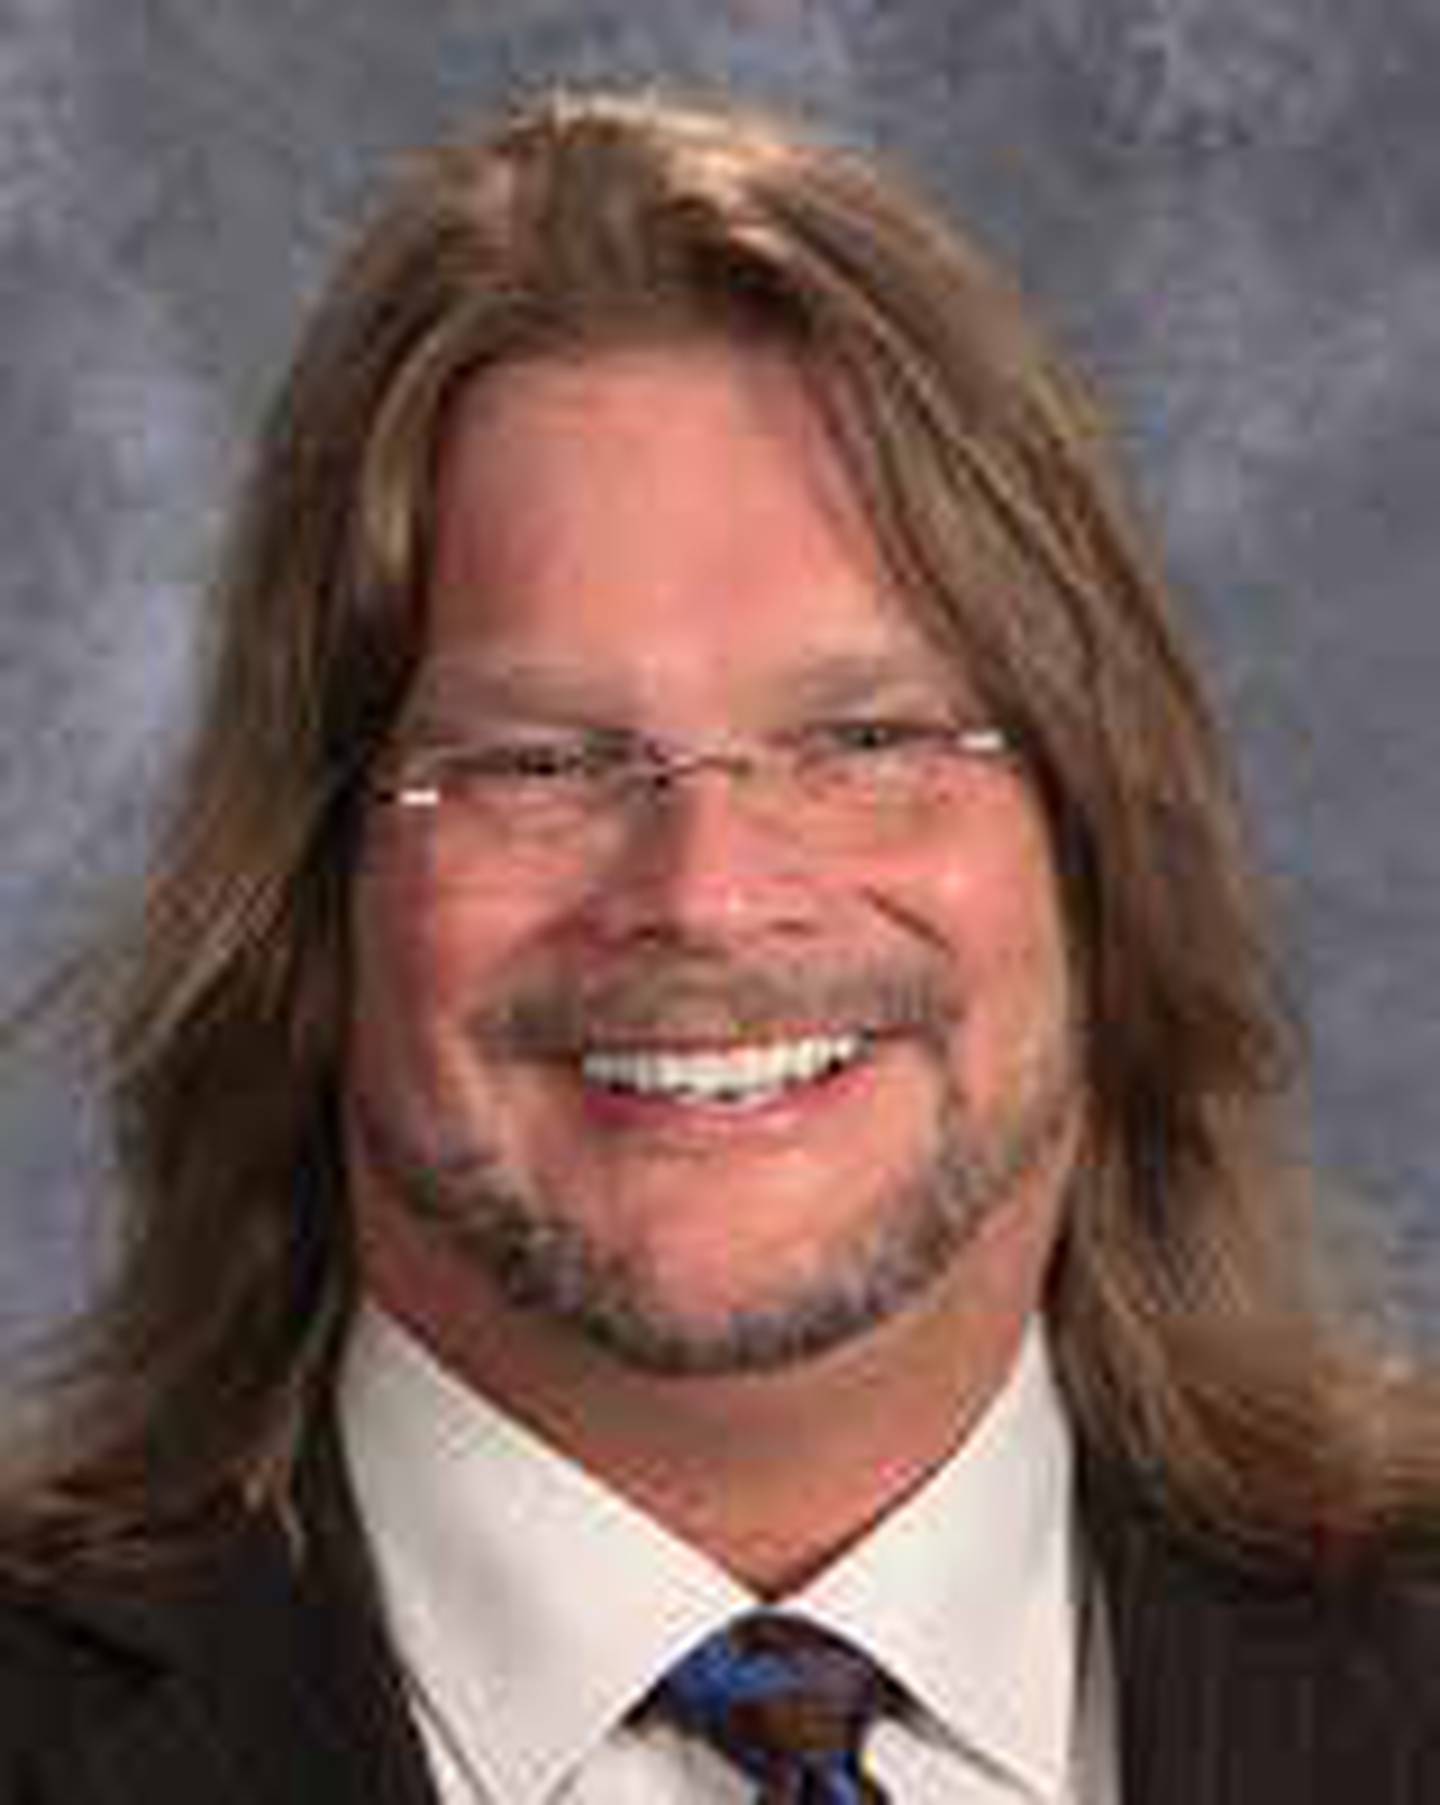 Mark Klaisner is president of the Illinois Association of Regional Superintendents of Schools.